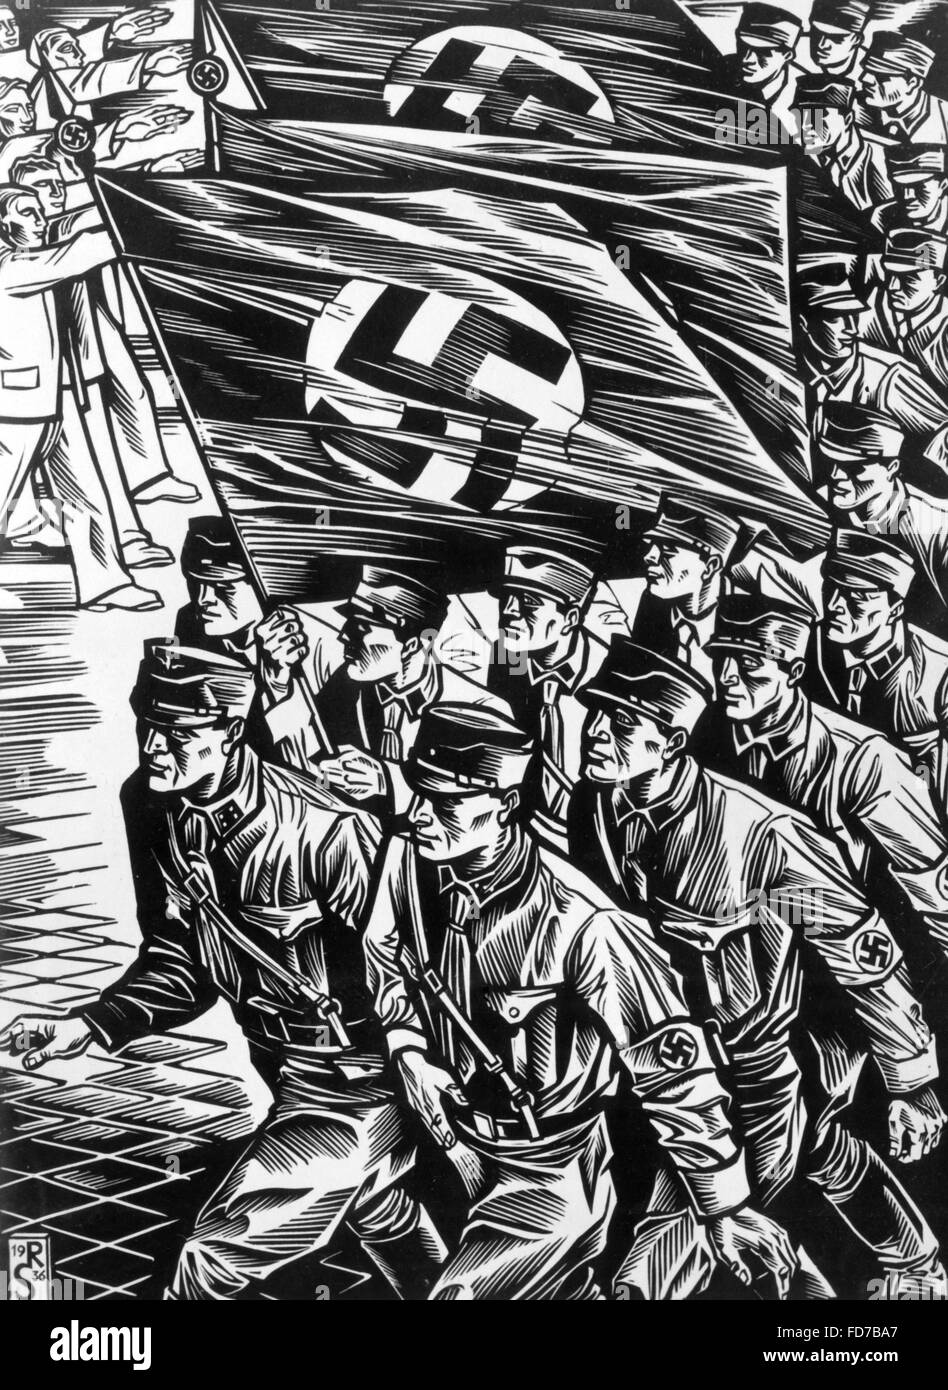 National Socialist art: Nazi propaganda Stock Photo